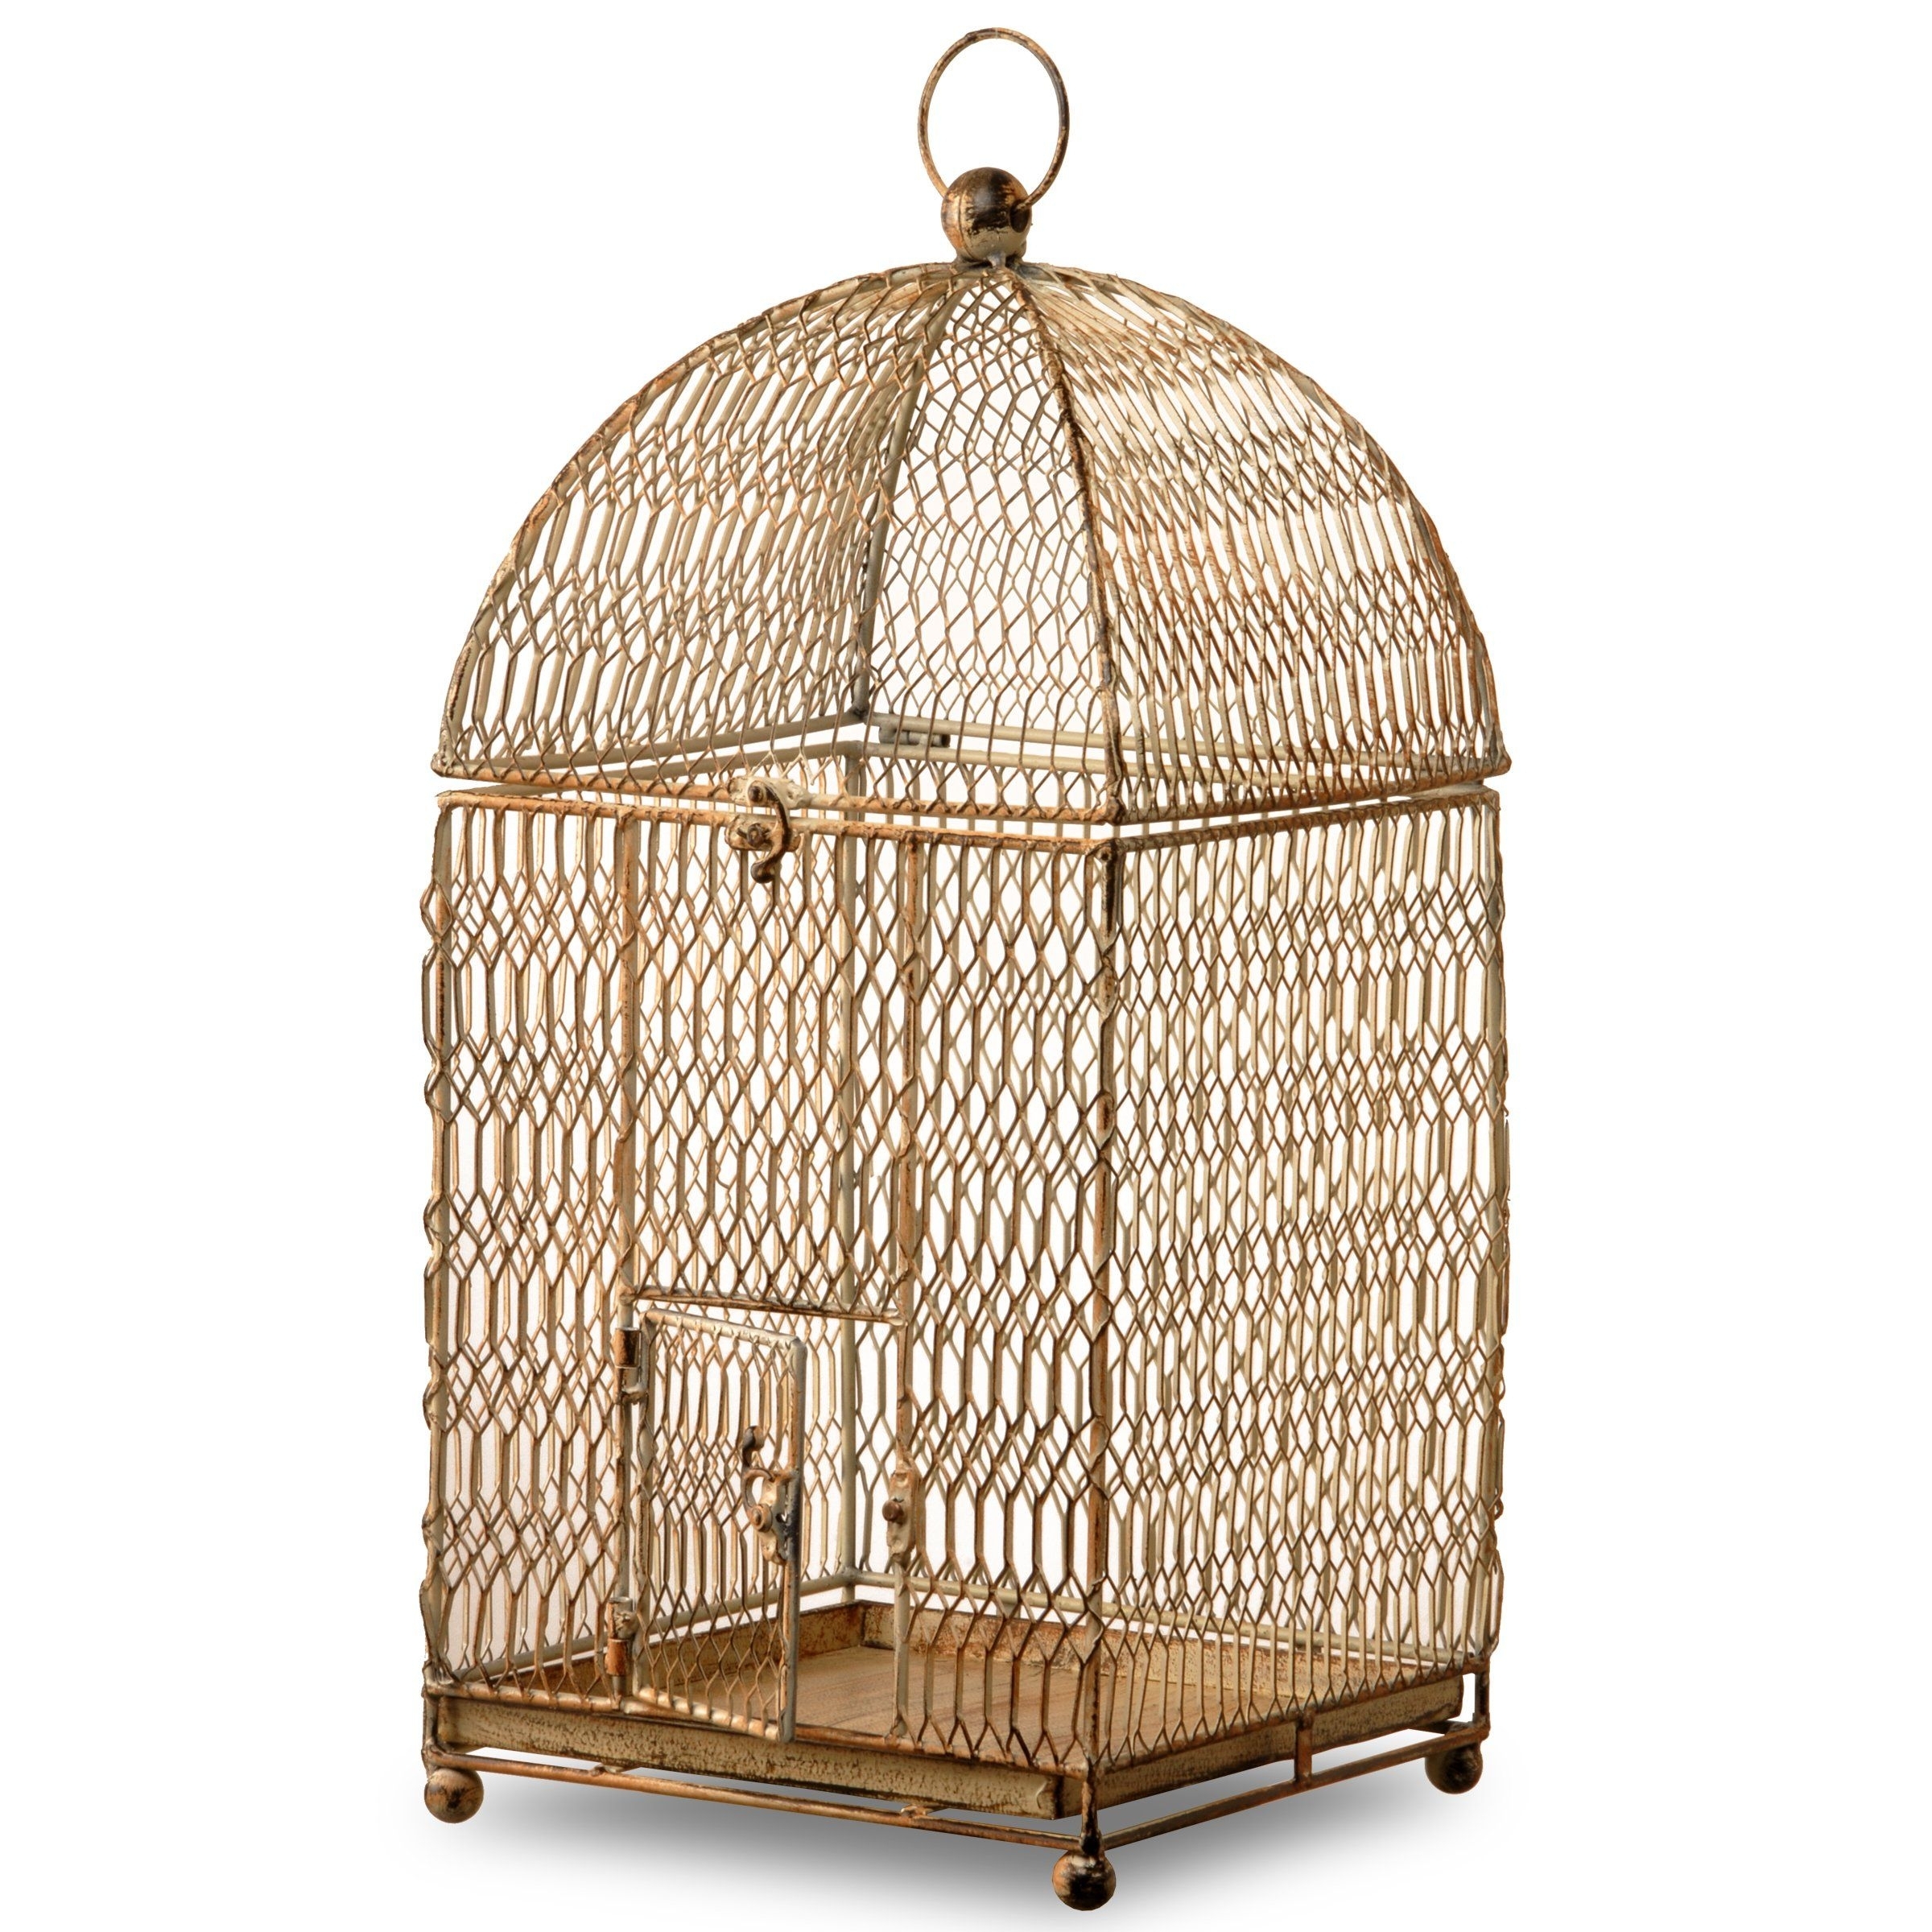 Hendryx Bird Cage - Foter  Bird cage decor, Vintage bird cage, Bird cage  design